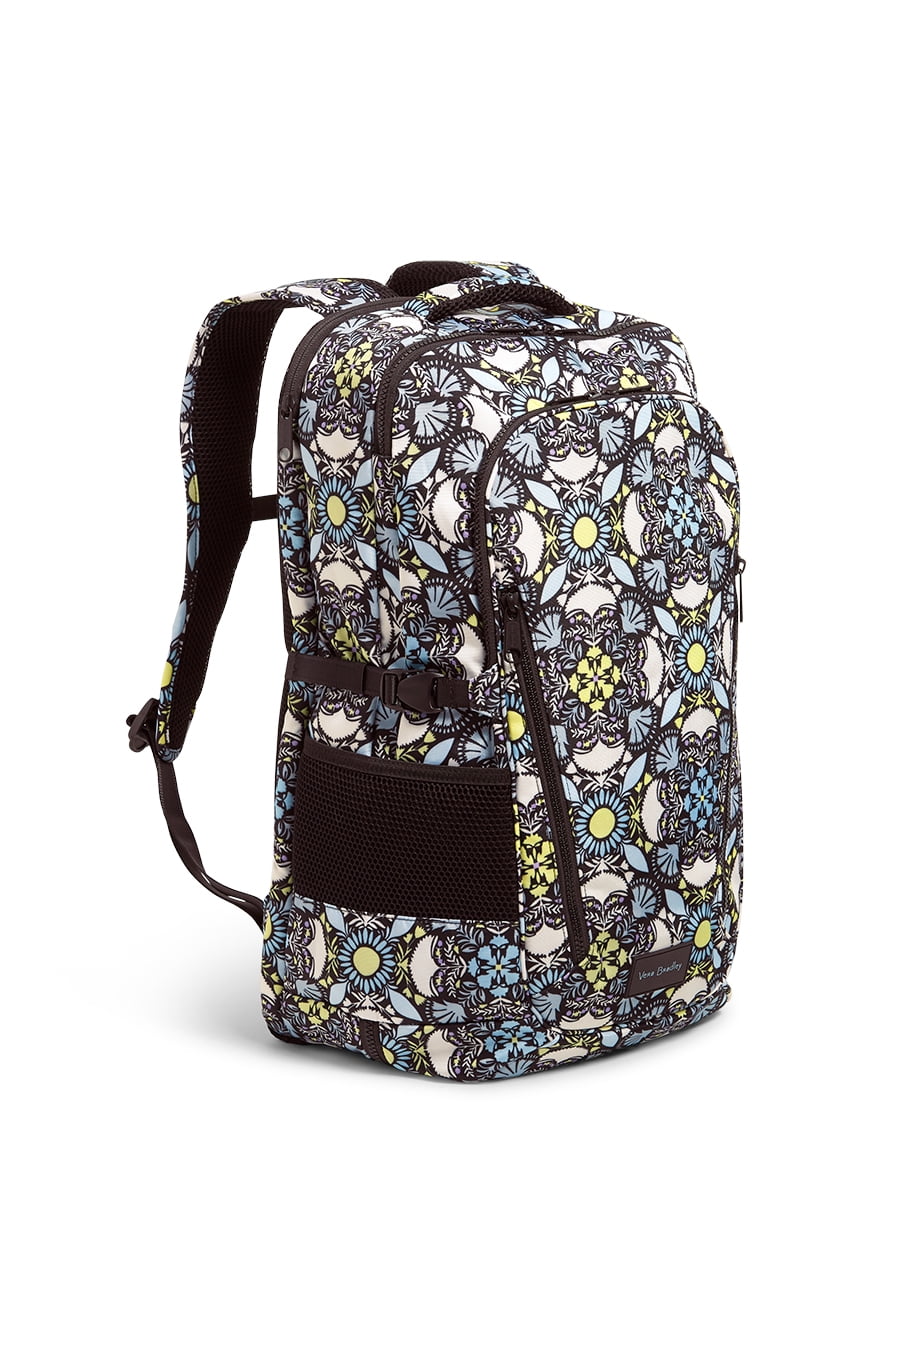 Vera Bradley Women's Recycled Lighten Up Lay Flat Travel Backpack 